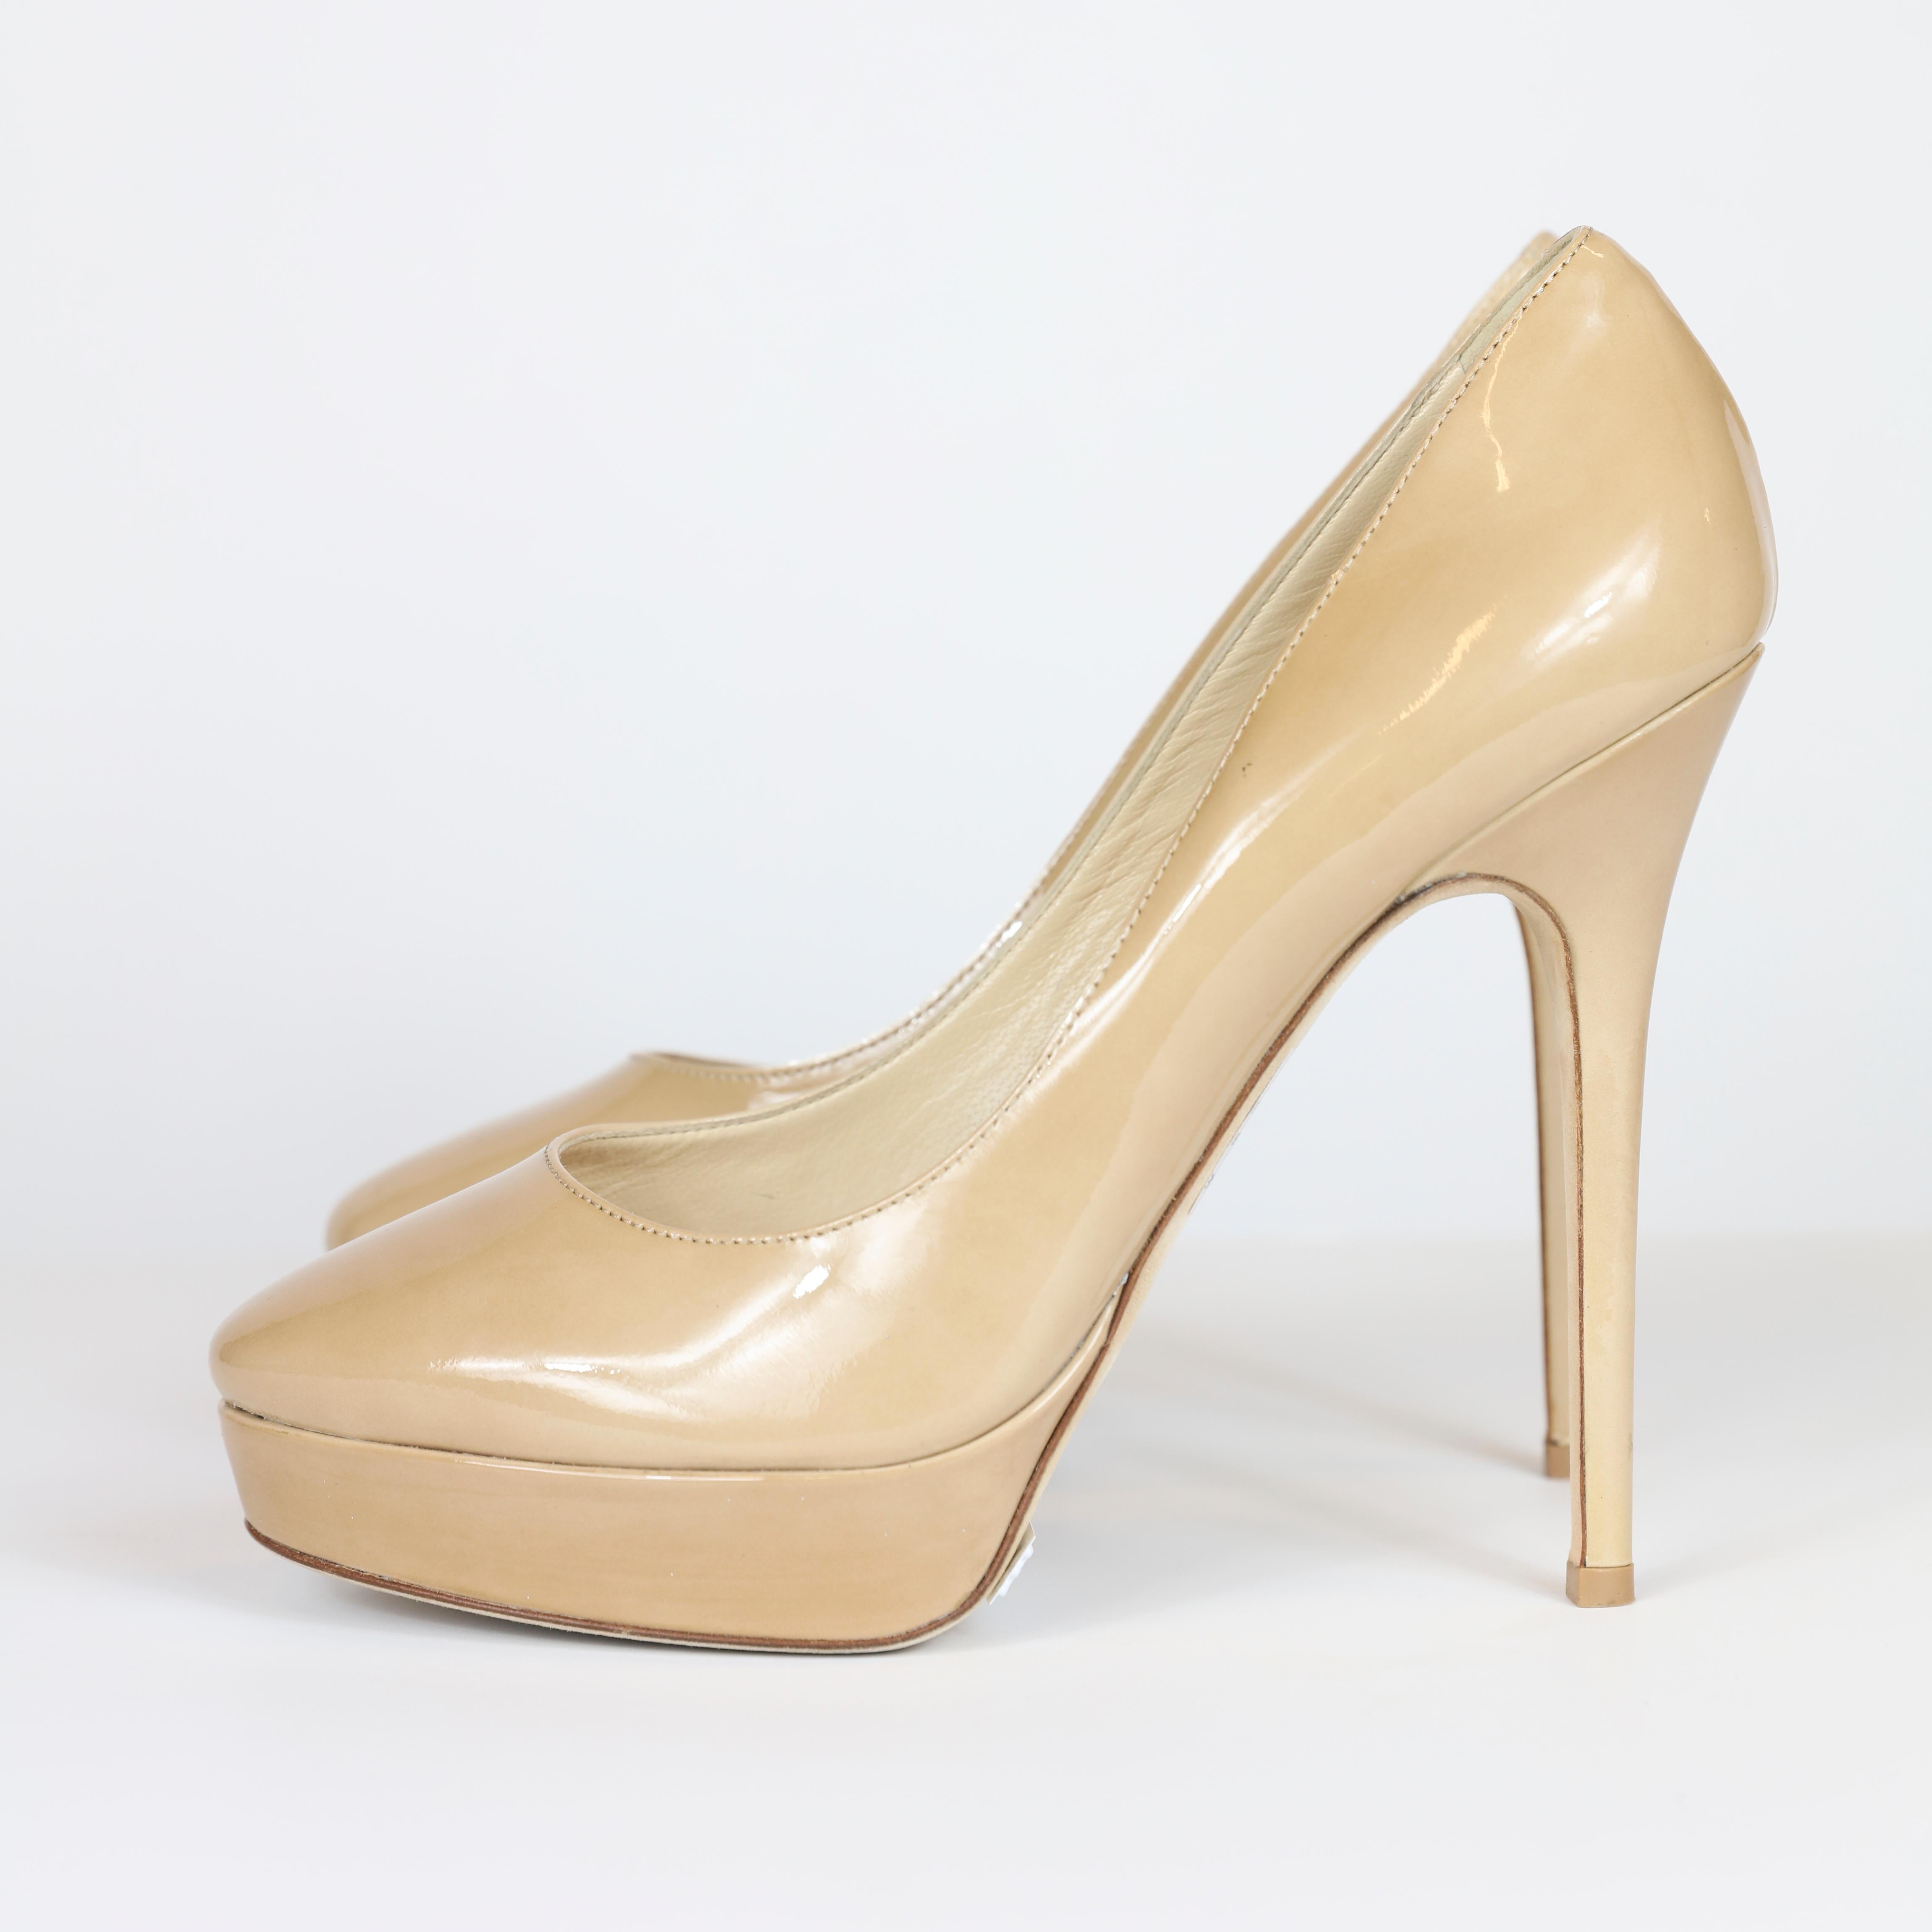 Classic nude stiletto heels